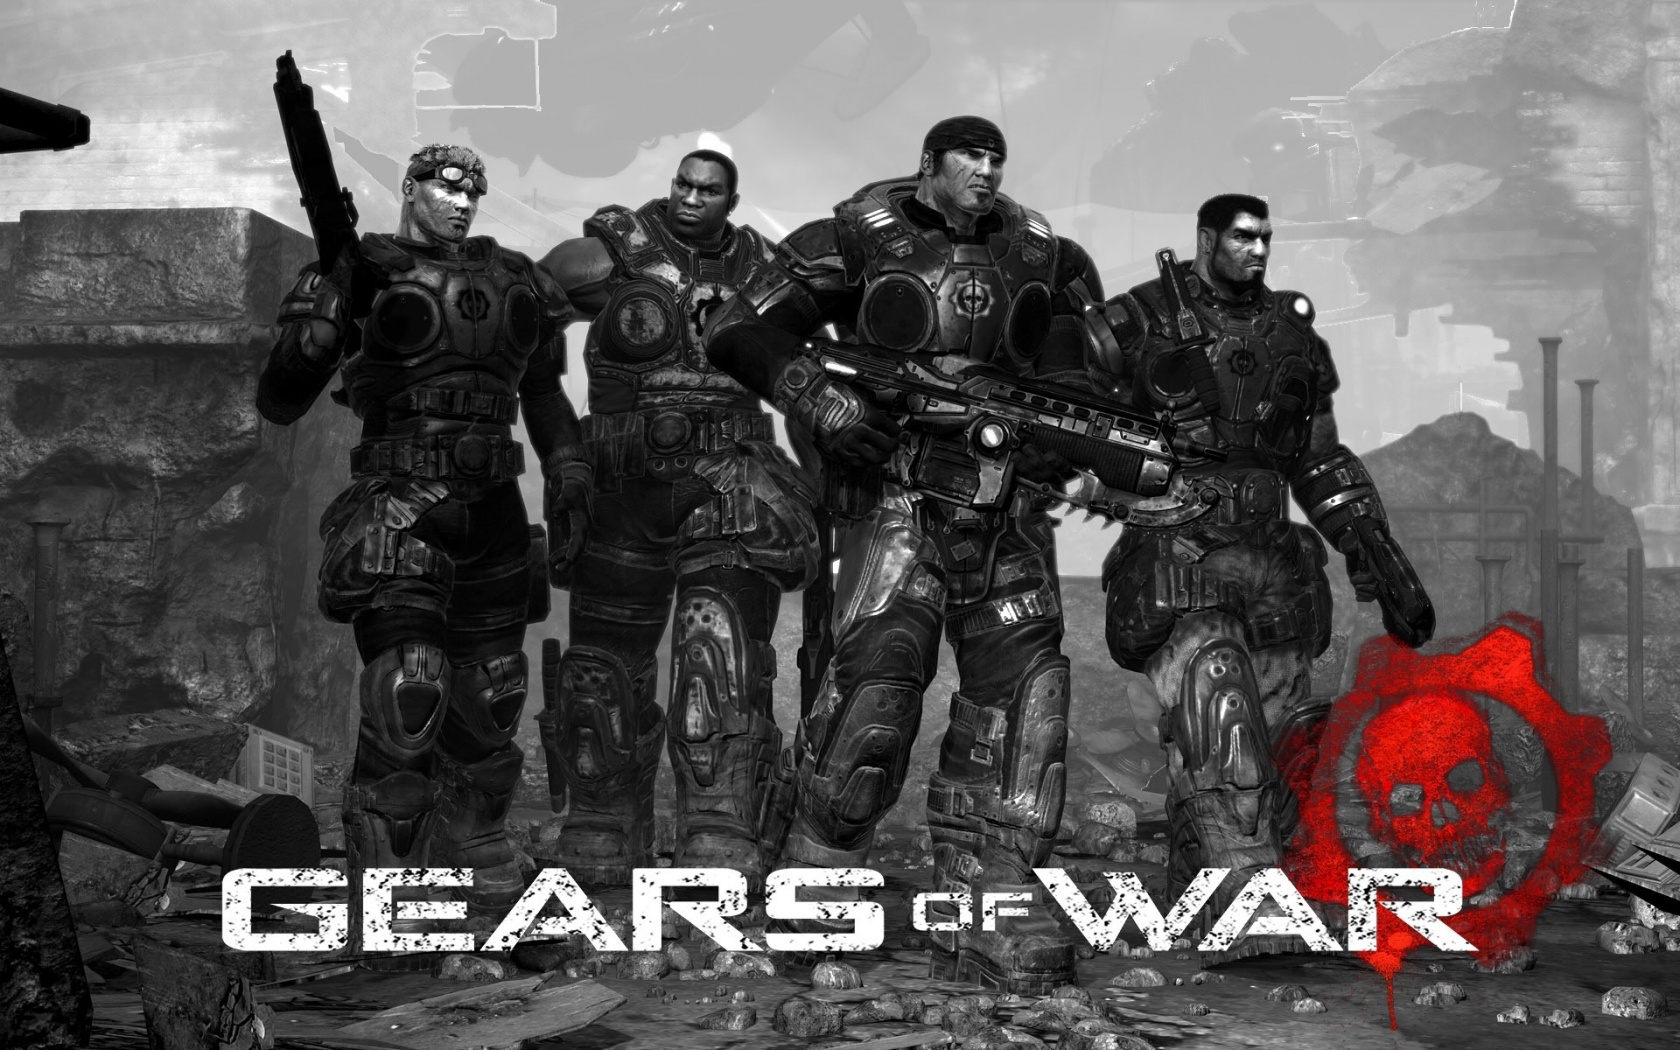 Gears Of War Desktop Pc And Mac Wallpaper